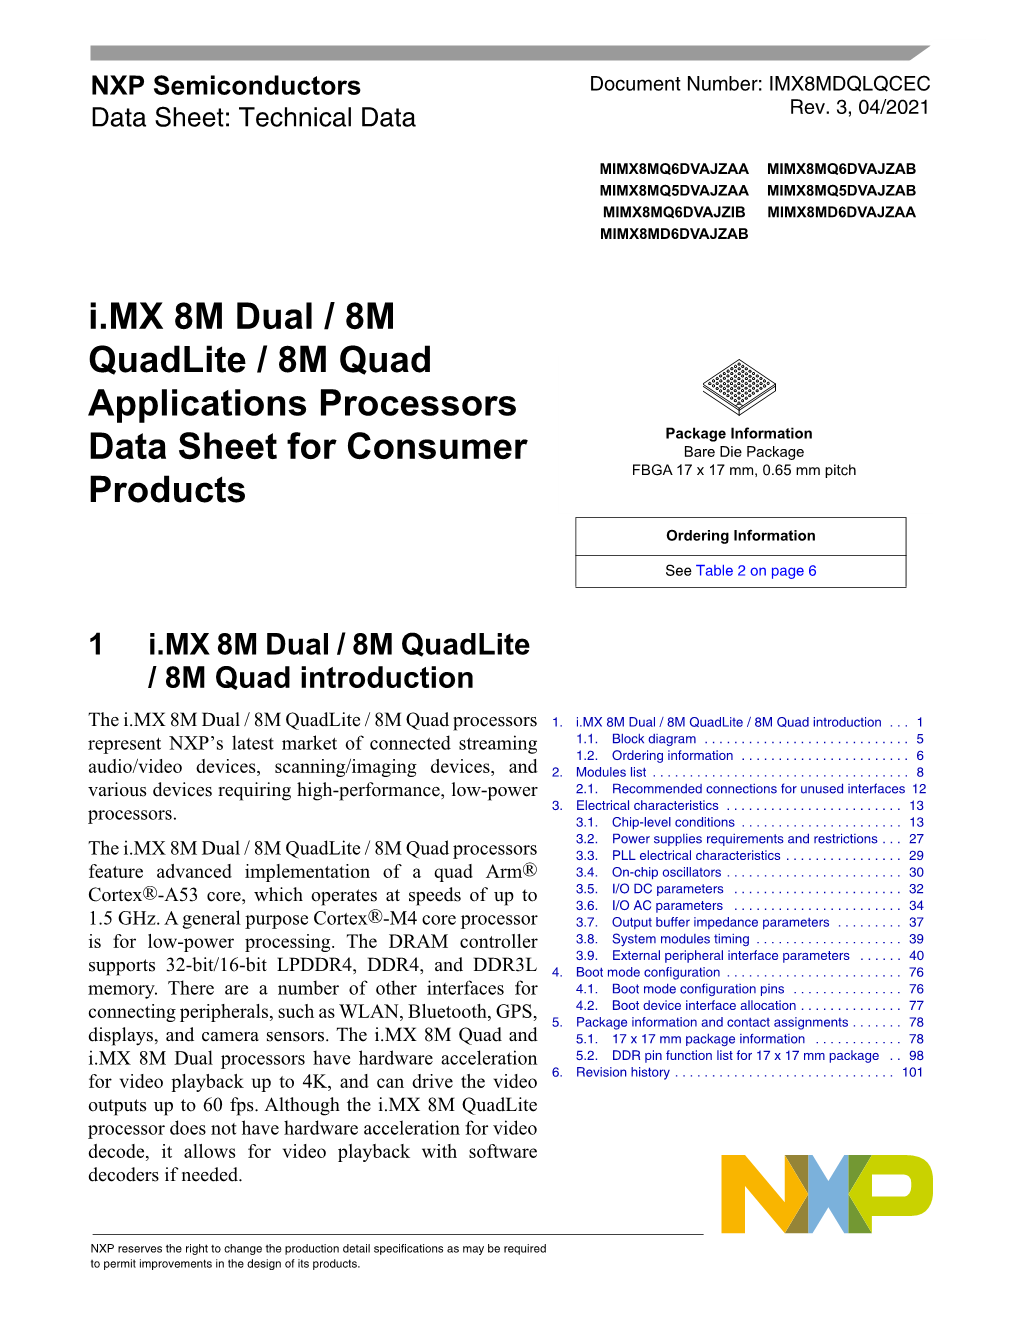 I.MX 8M Dual / 8M Quadlite / 8M Quad Applications Processors Data Sheet for Consumer Products, Rev